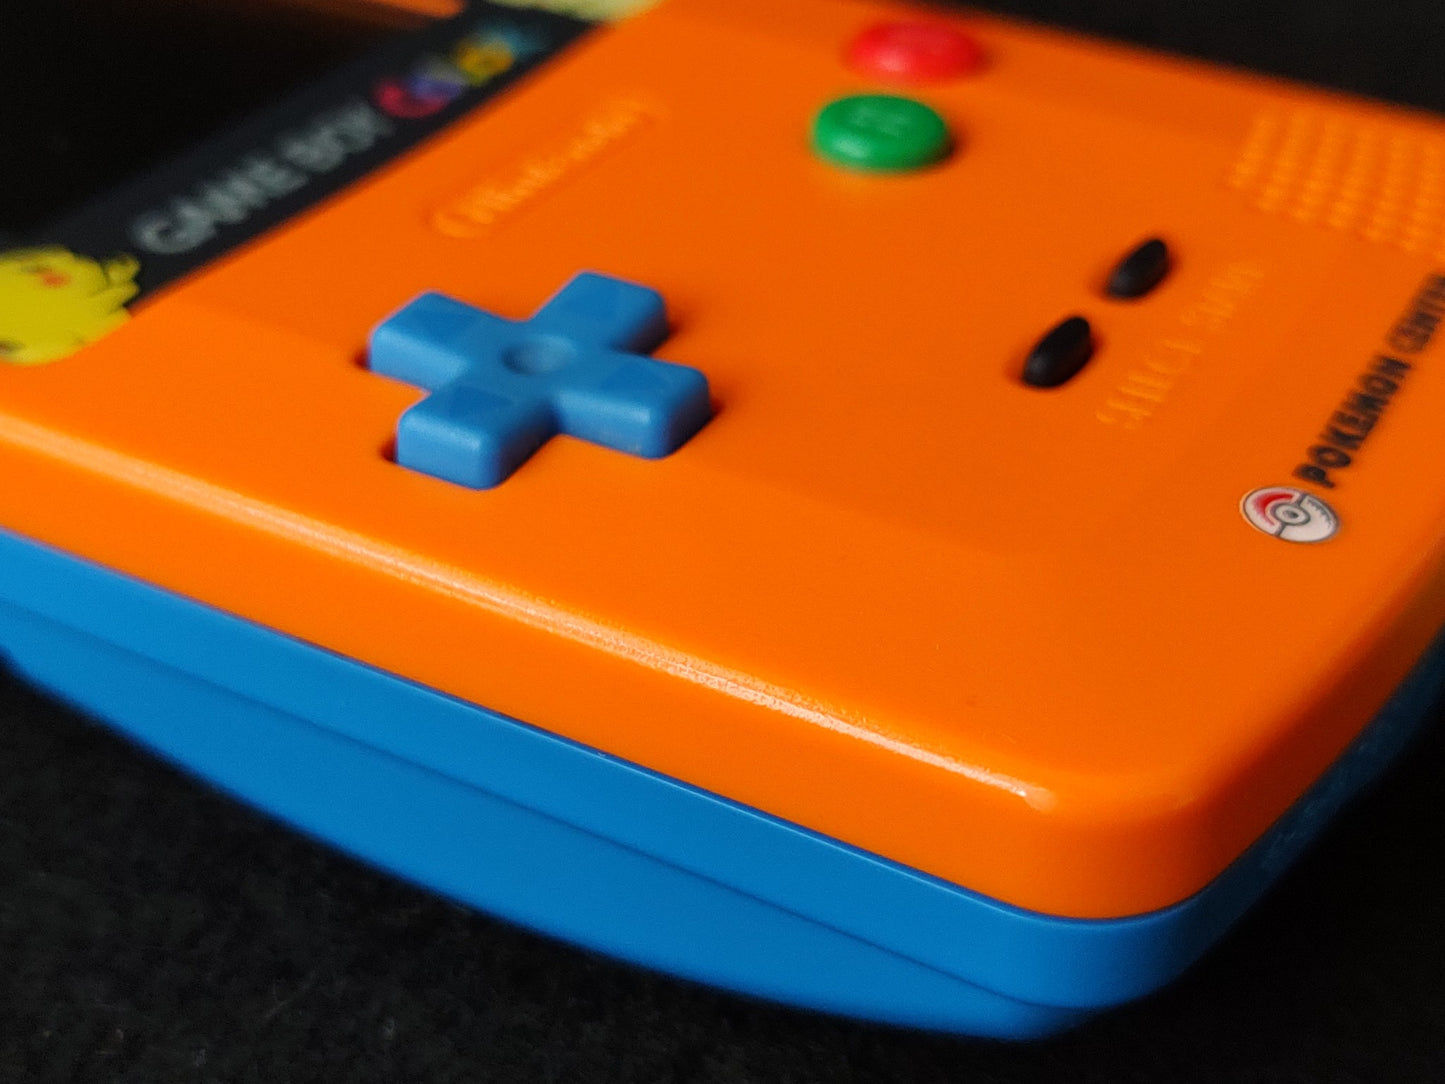 Nintendo Gameboy Color Pokemon Limited edition Orange color console set -f0906-